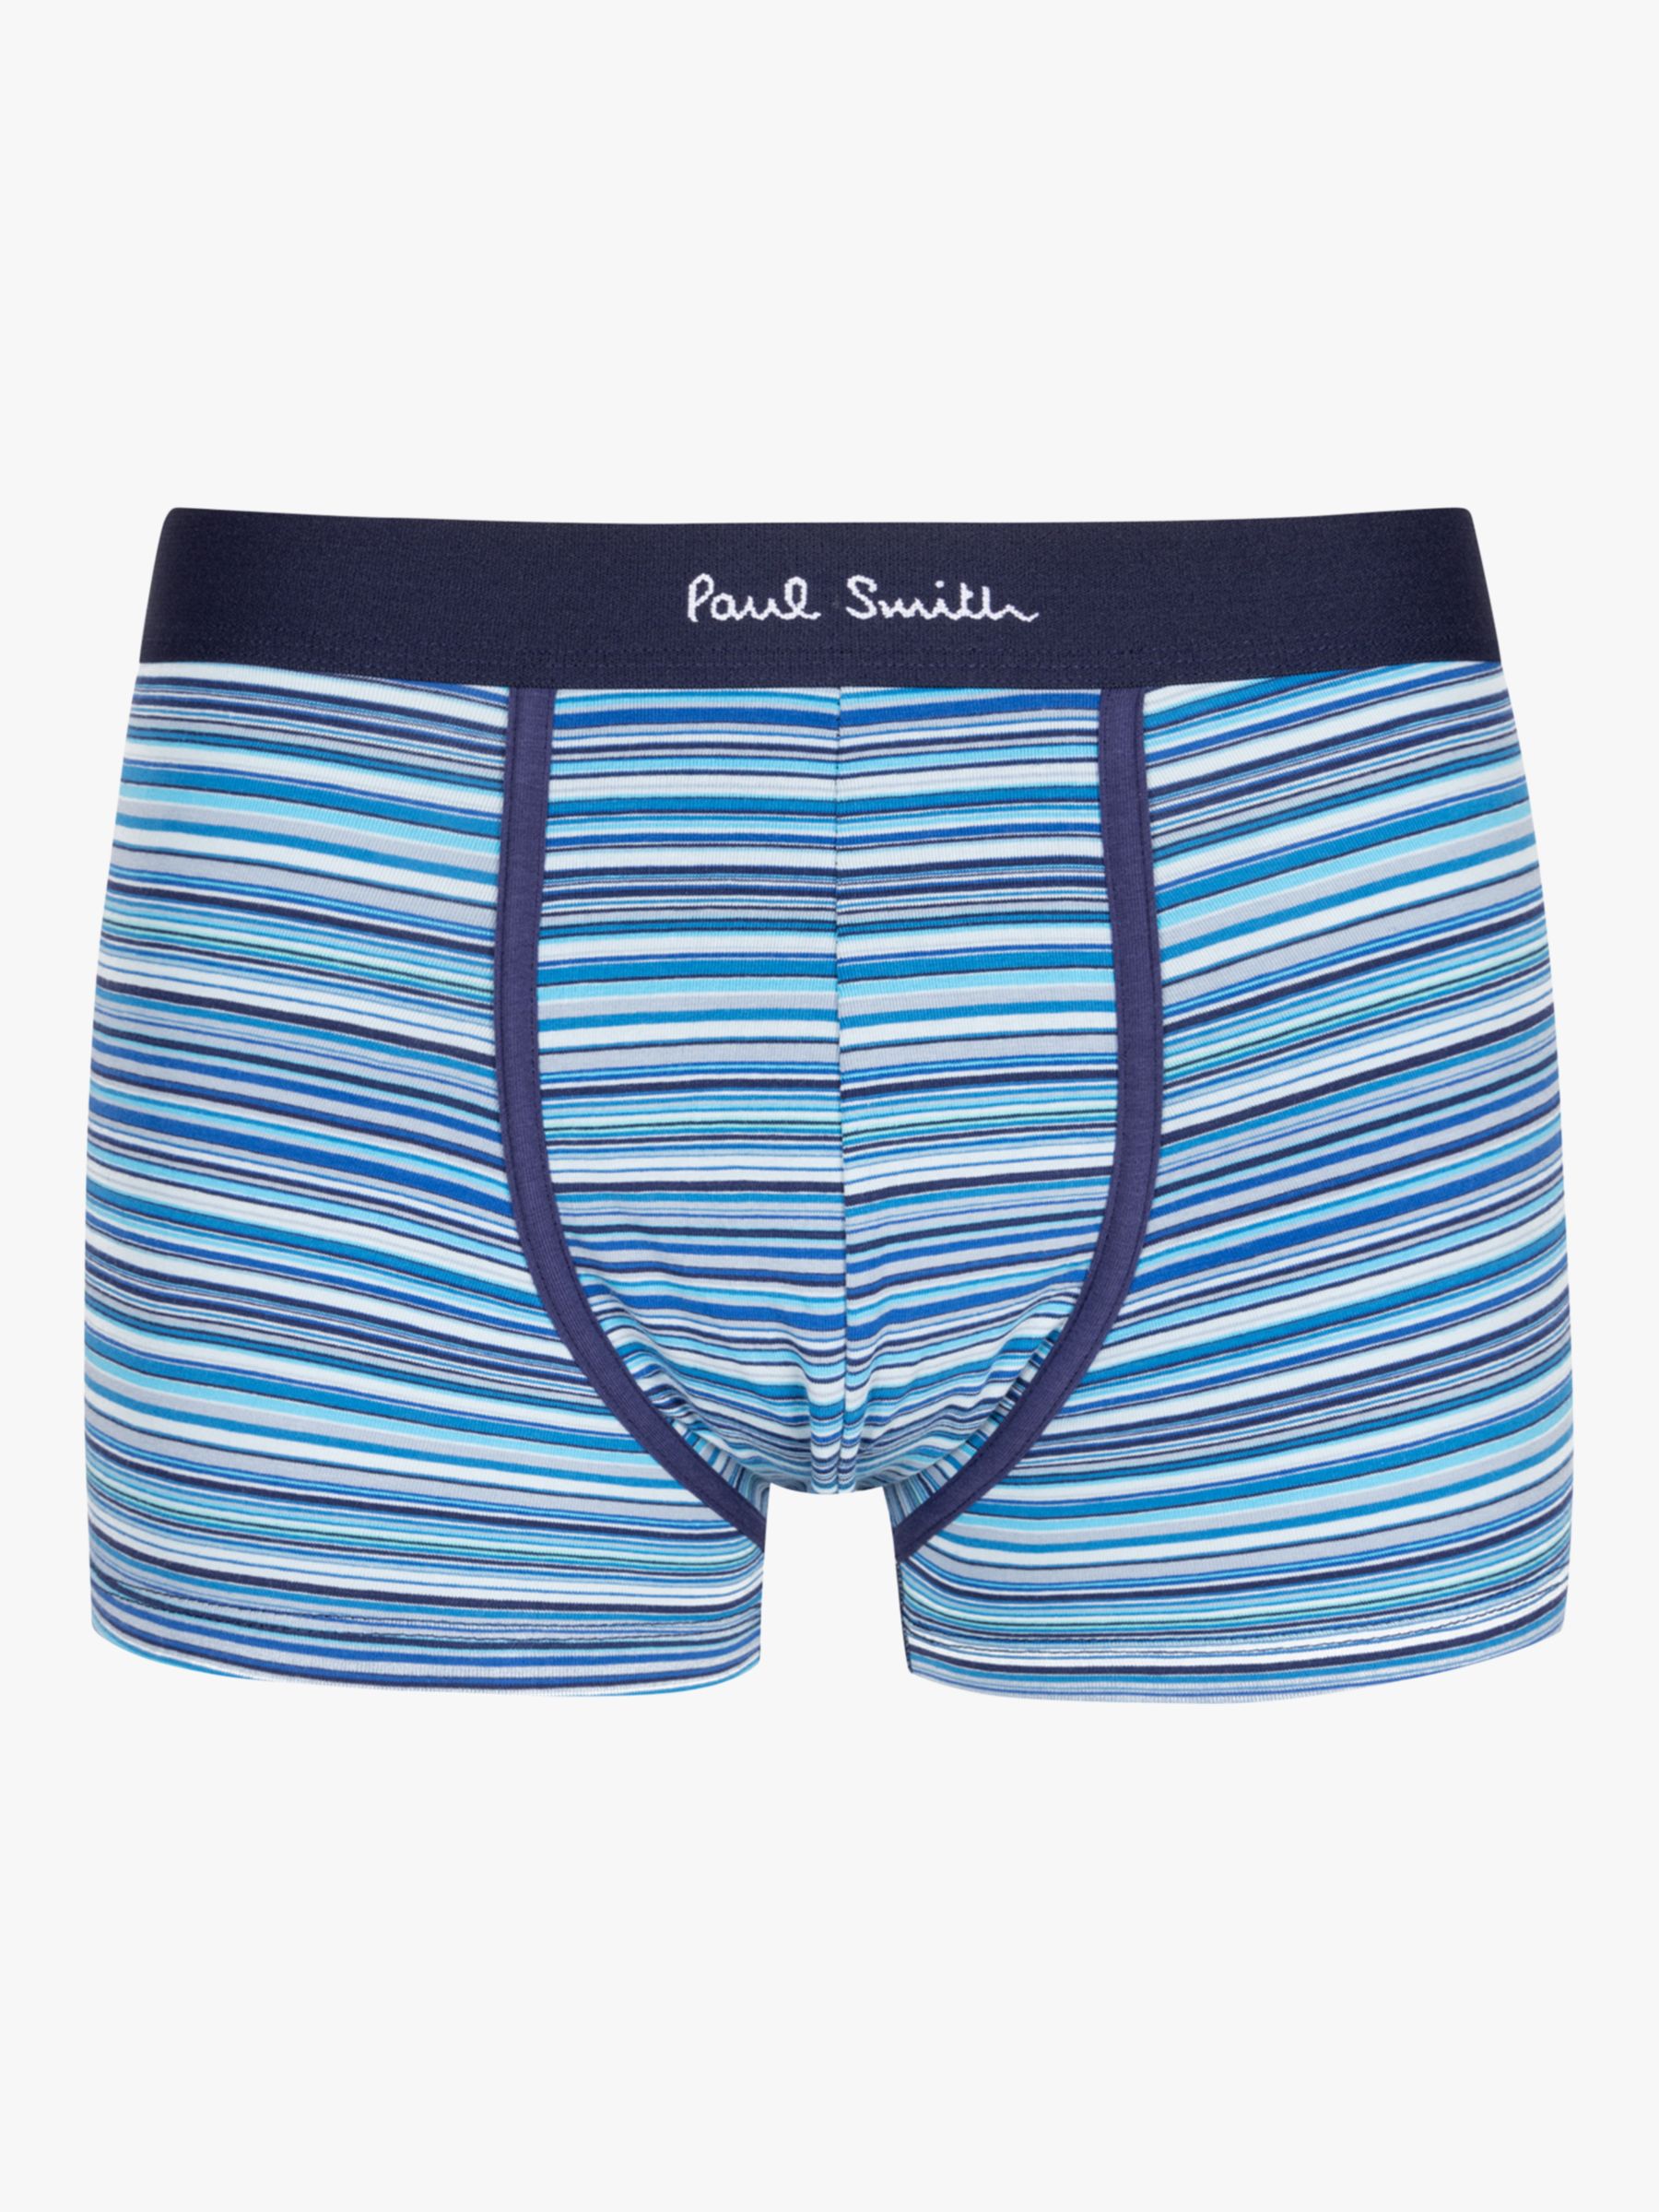 Paul Smith Signature Stripe Organic Cotton Blend Trunks, Pack of 3, Blue/Multi, S